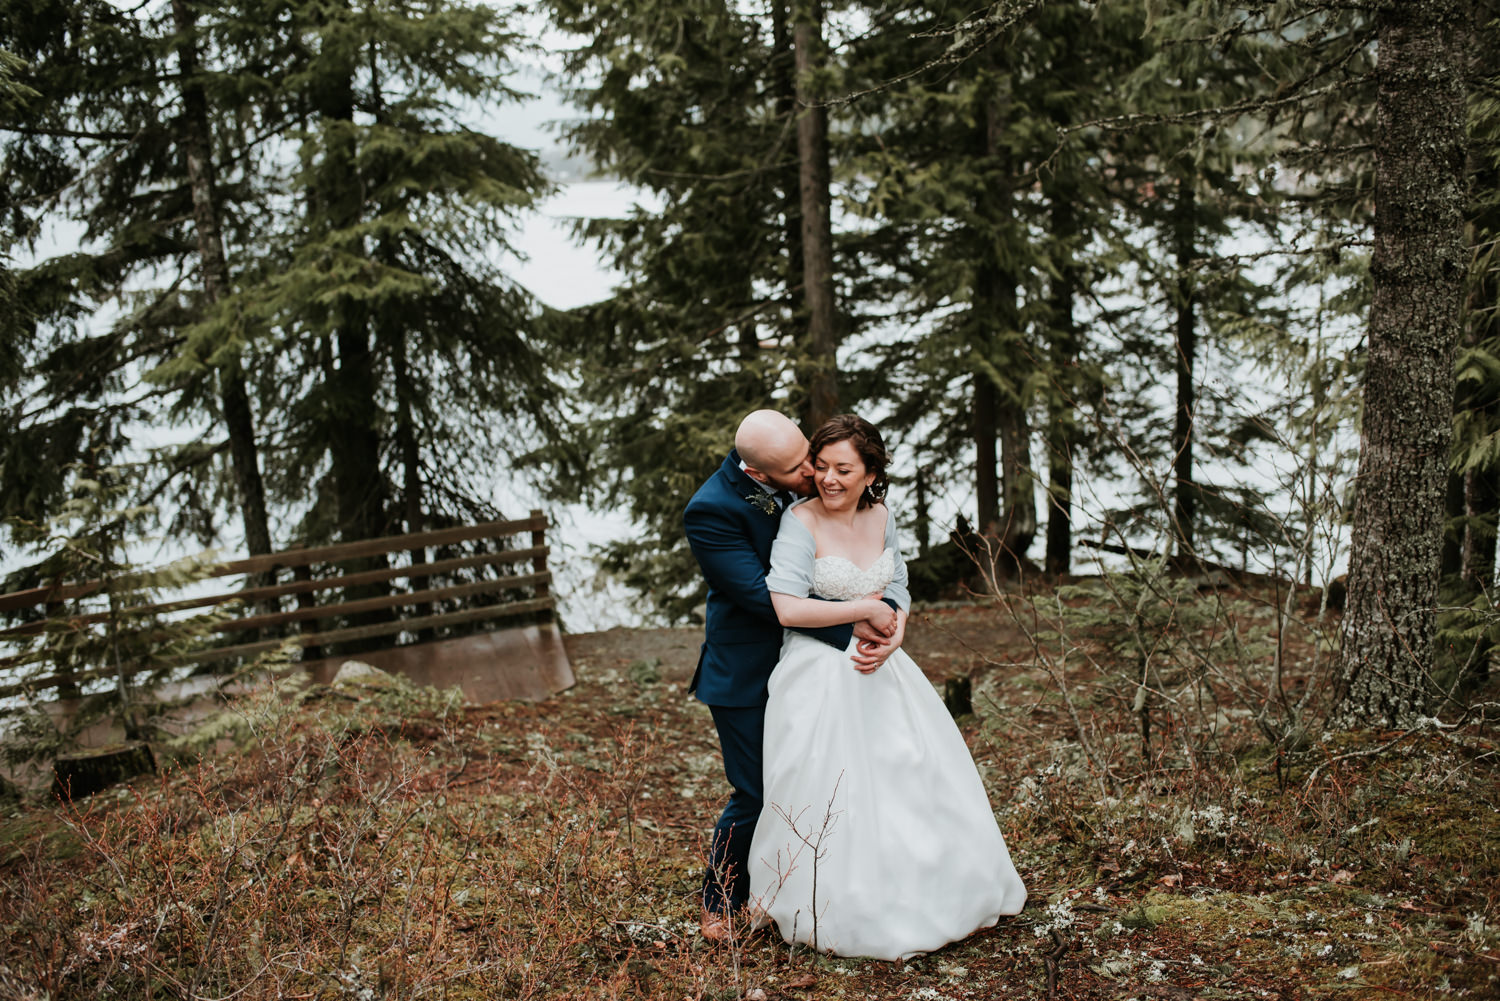 Whistler wedding photographer captures Bride and Groom